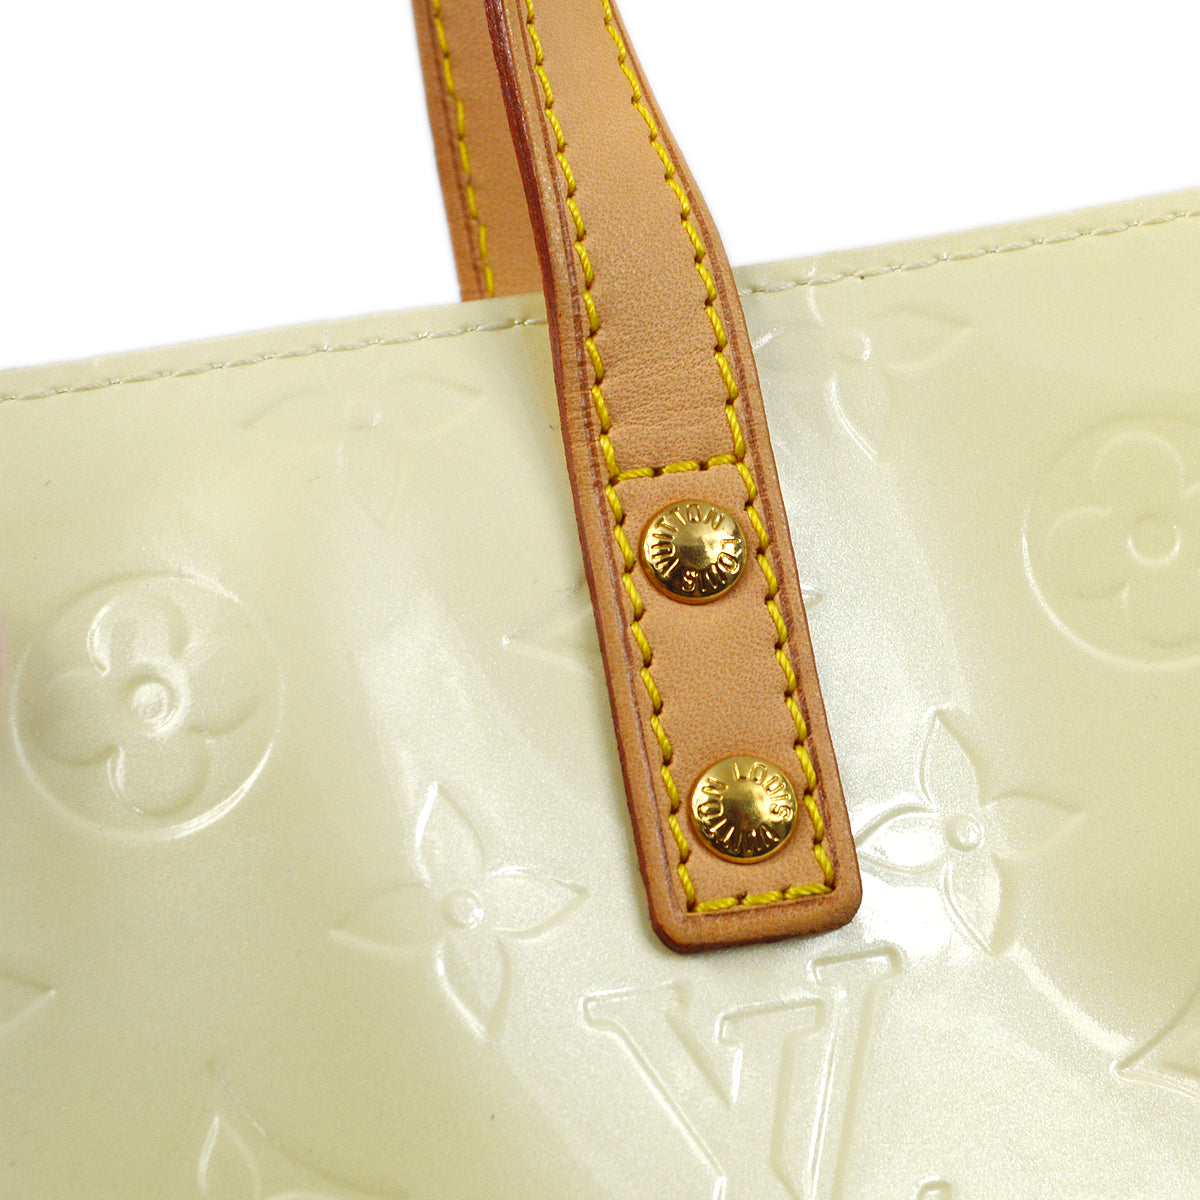 Louis Vuitton 2006 White Vernis Reade PM Tote Handbag M91336